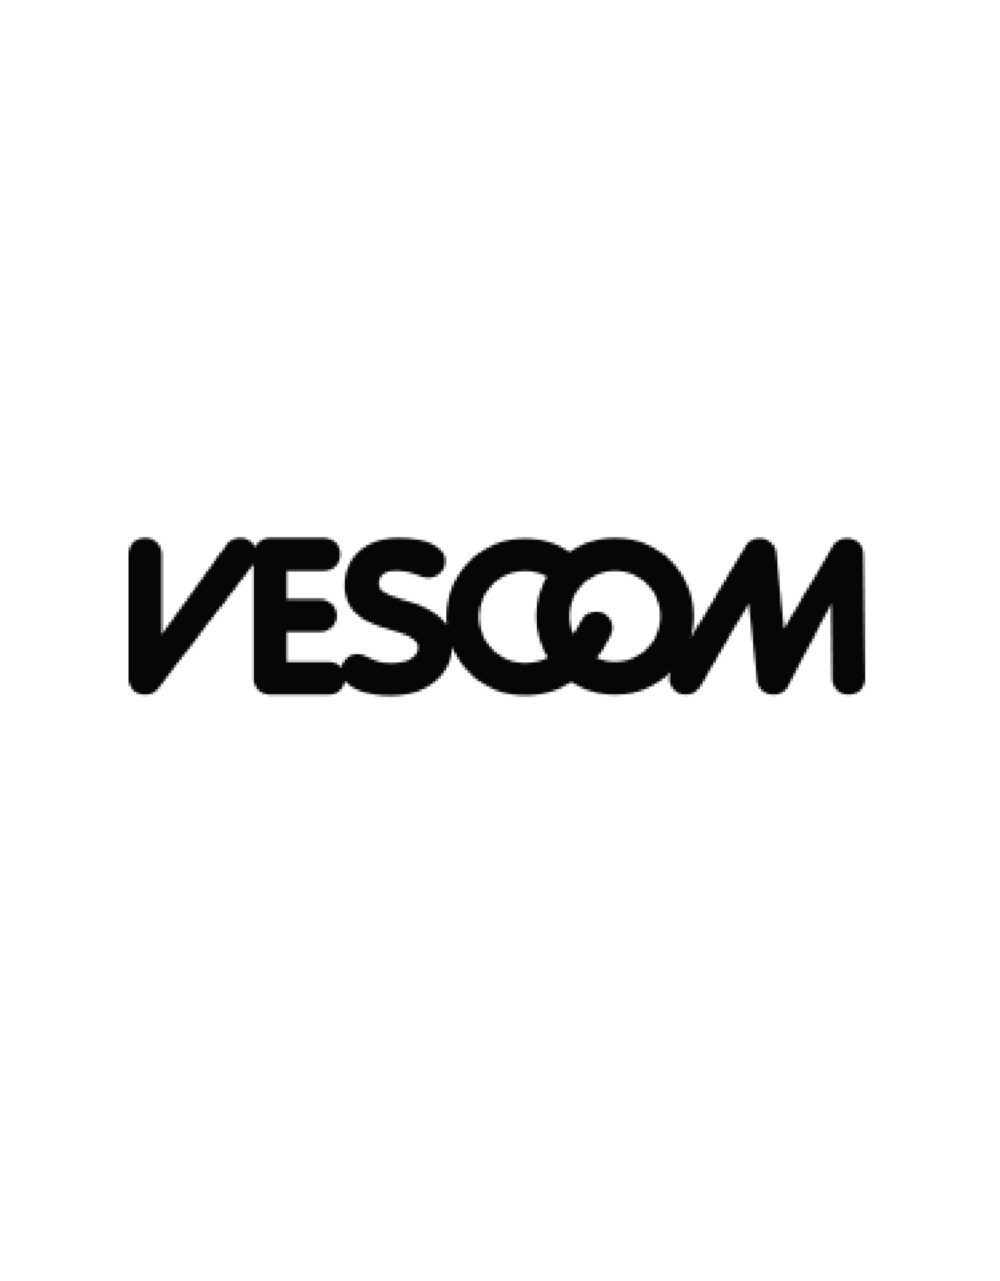 VESCOM-cop